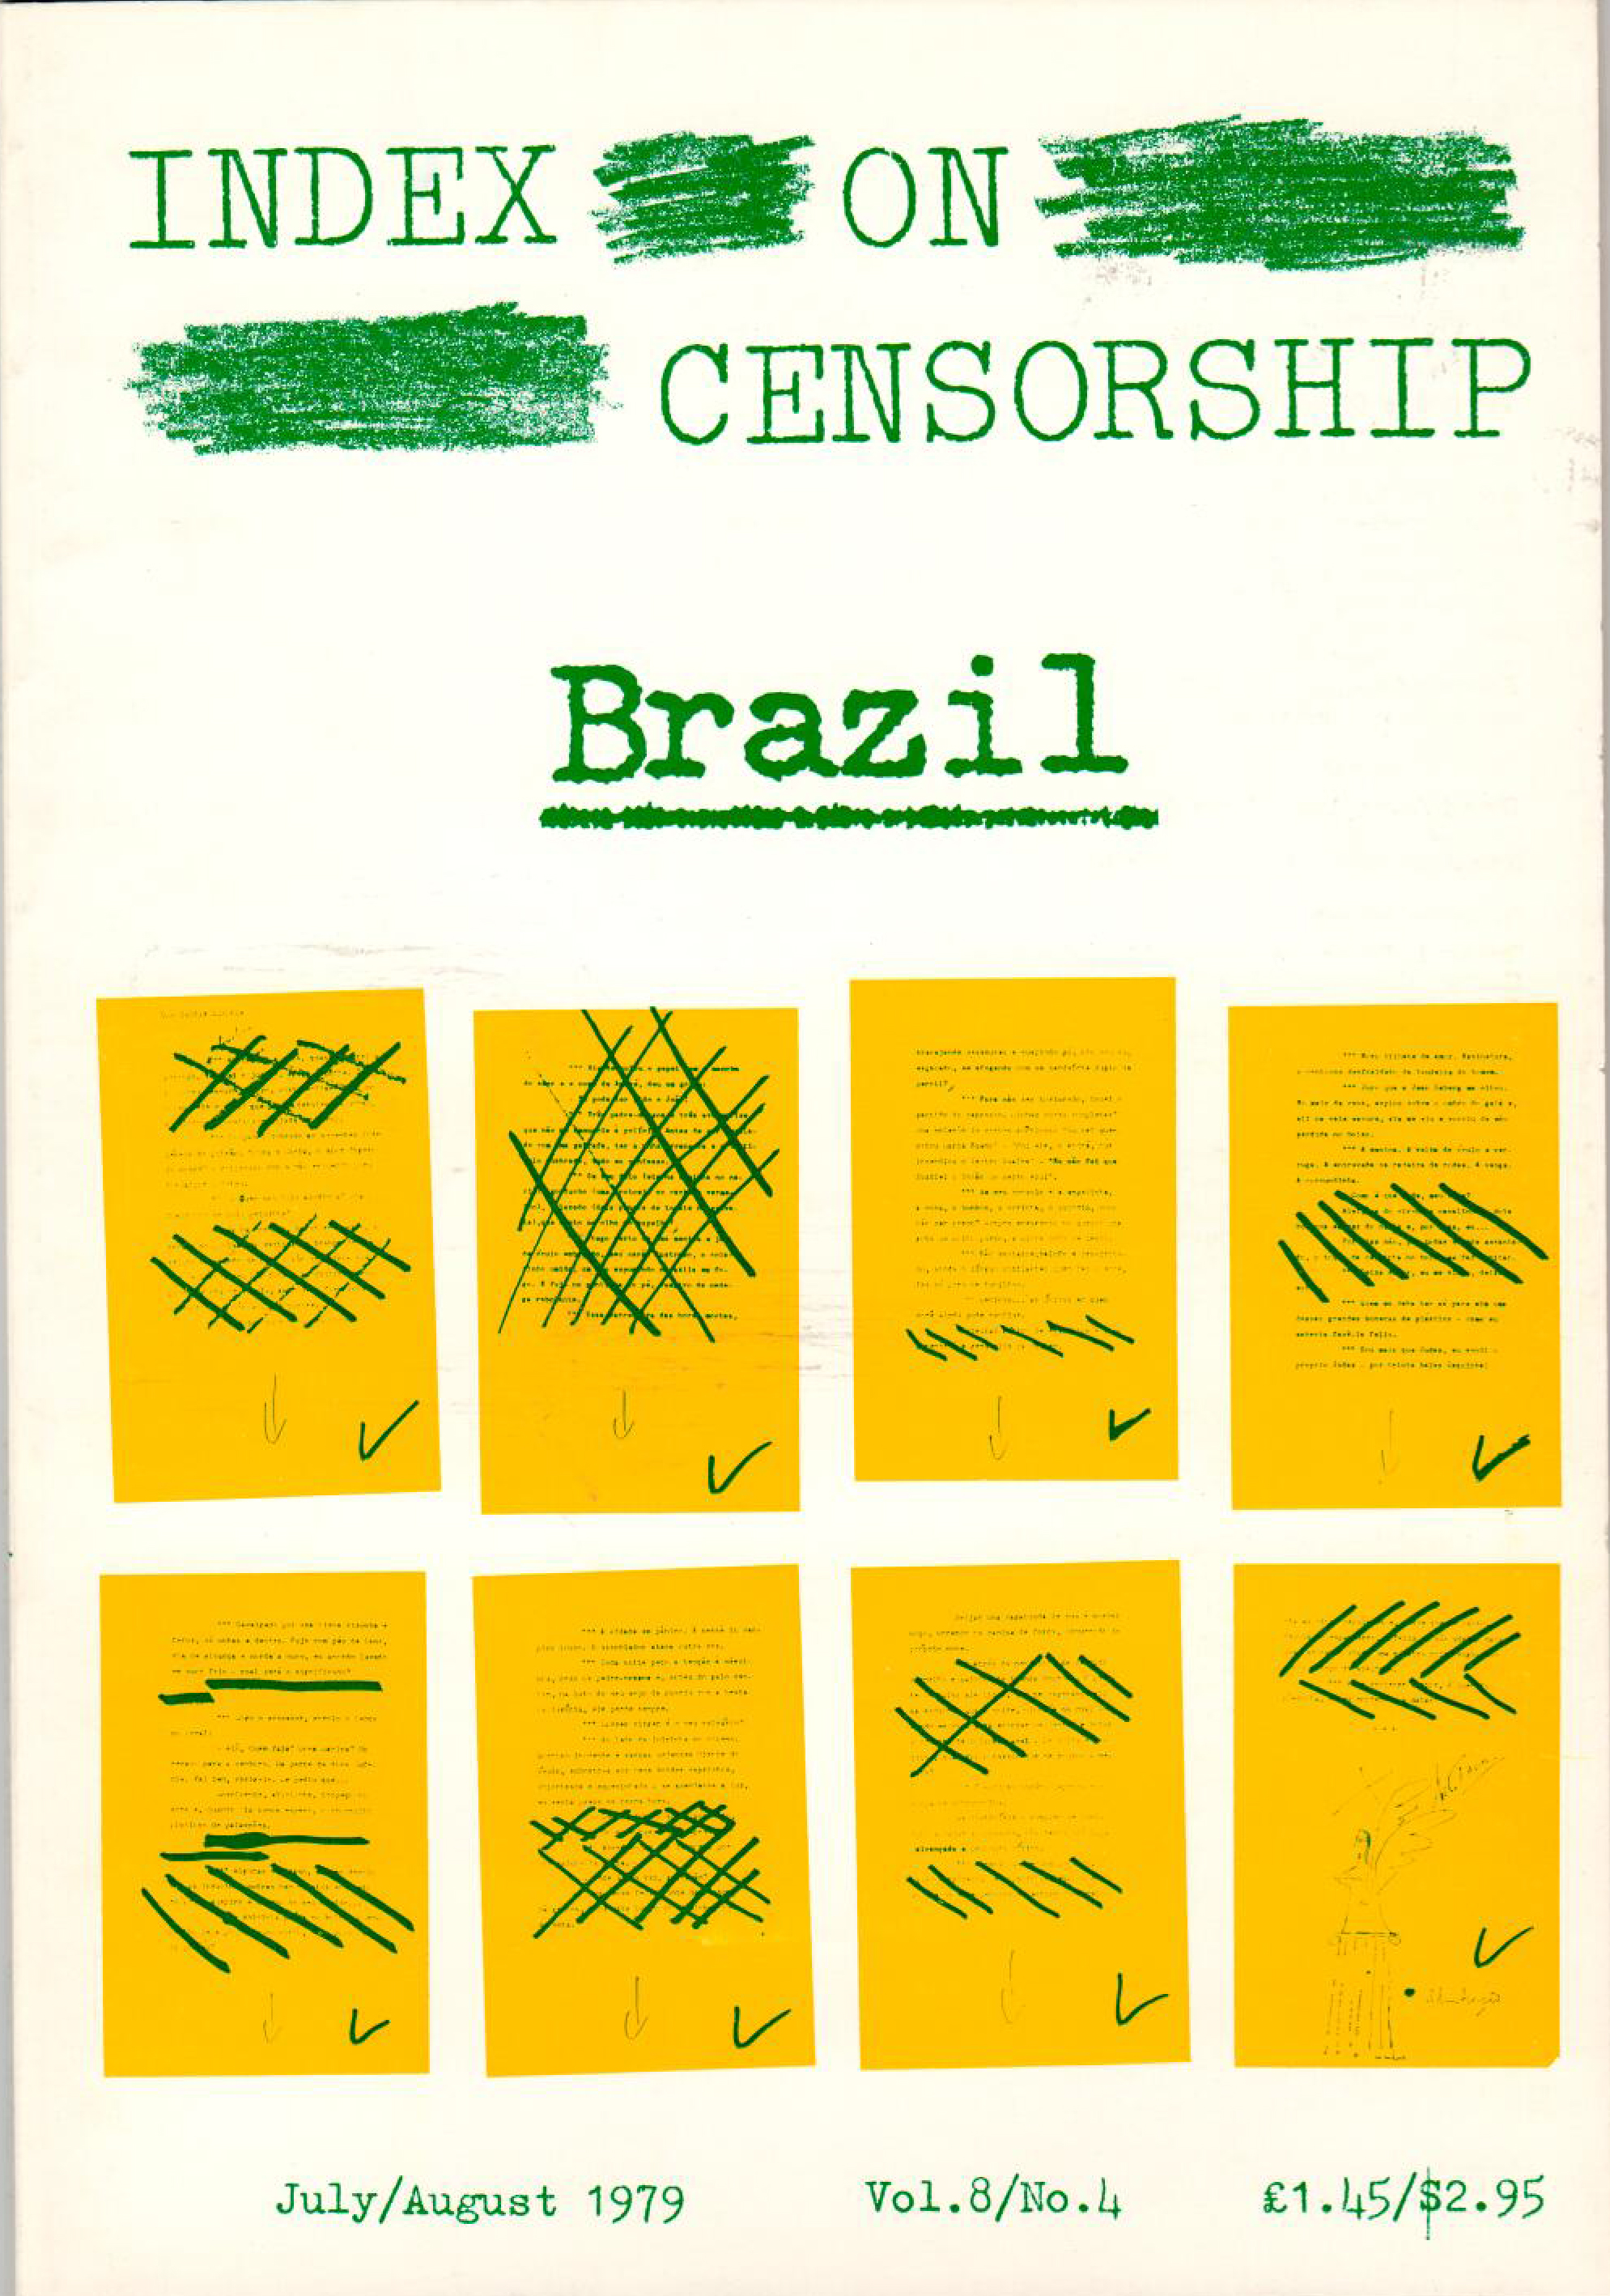 Brazil, the July 1979 issue of Index on Censorship magazine